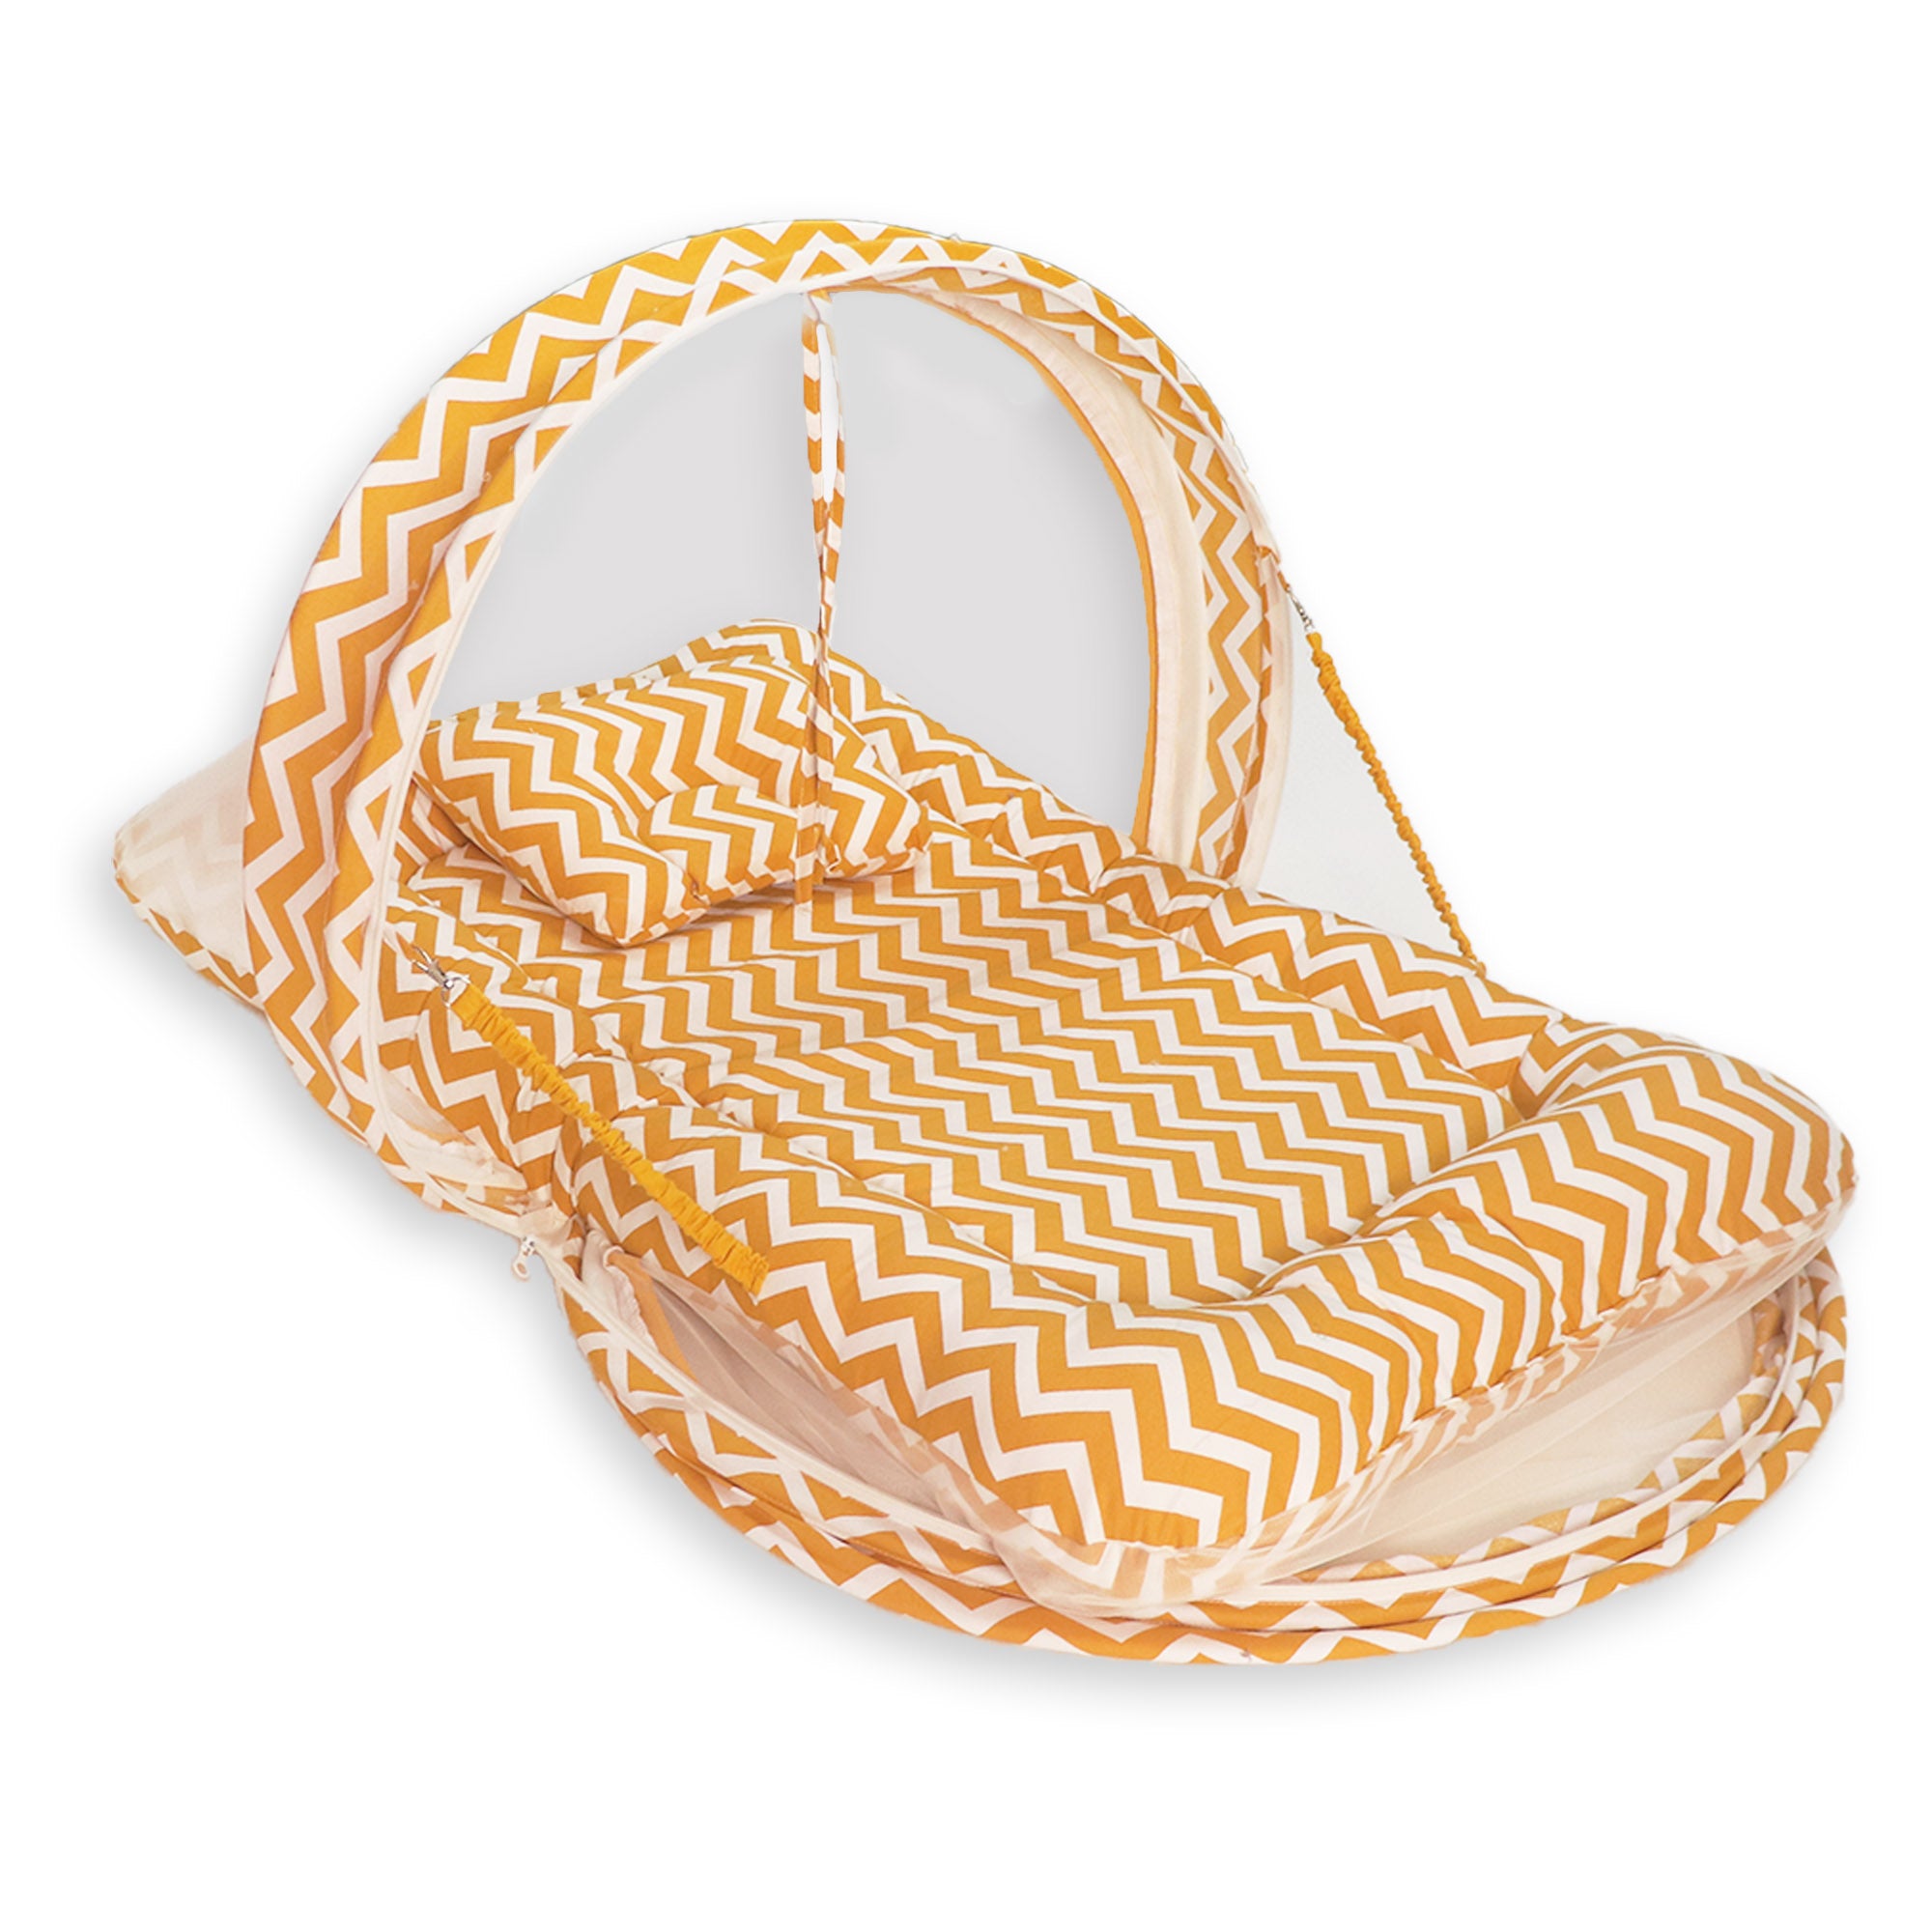 Chevron -  Kradyl Kroft Bassinet Style Mosquito Net Bedding for Infants